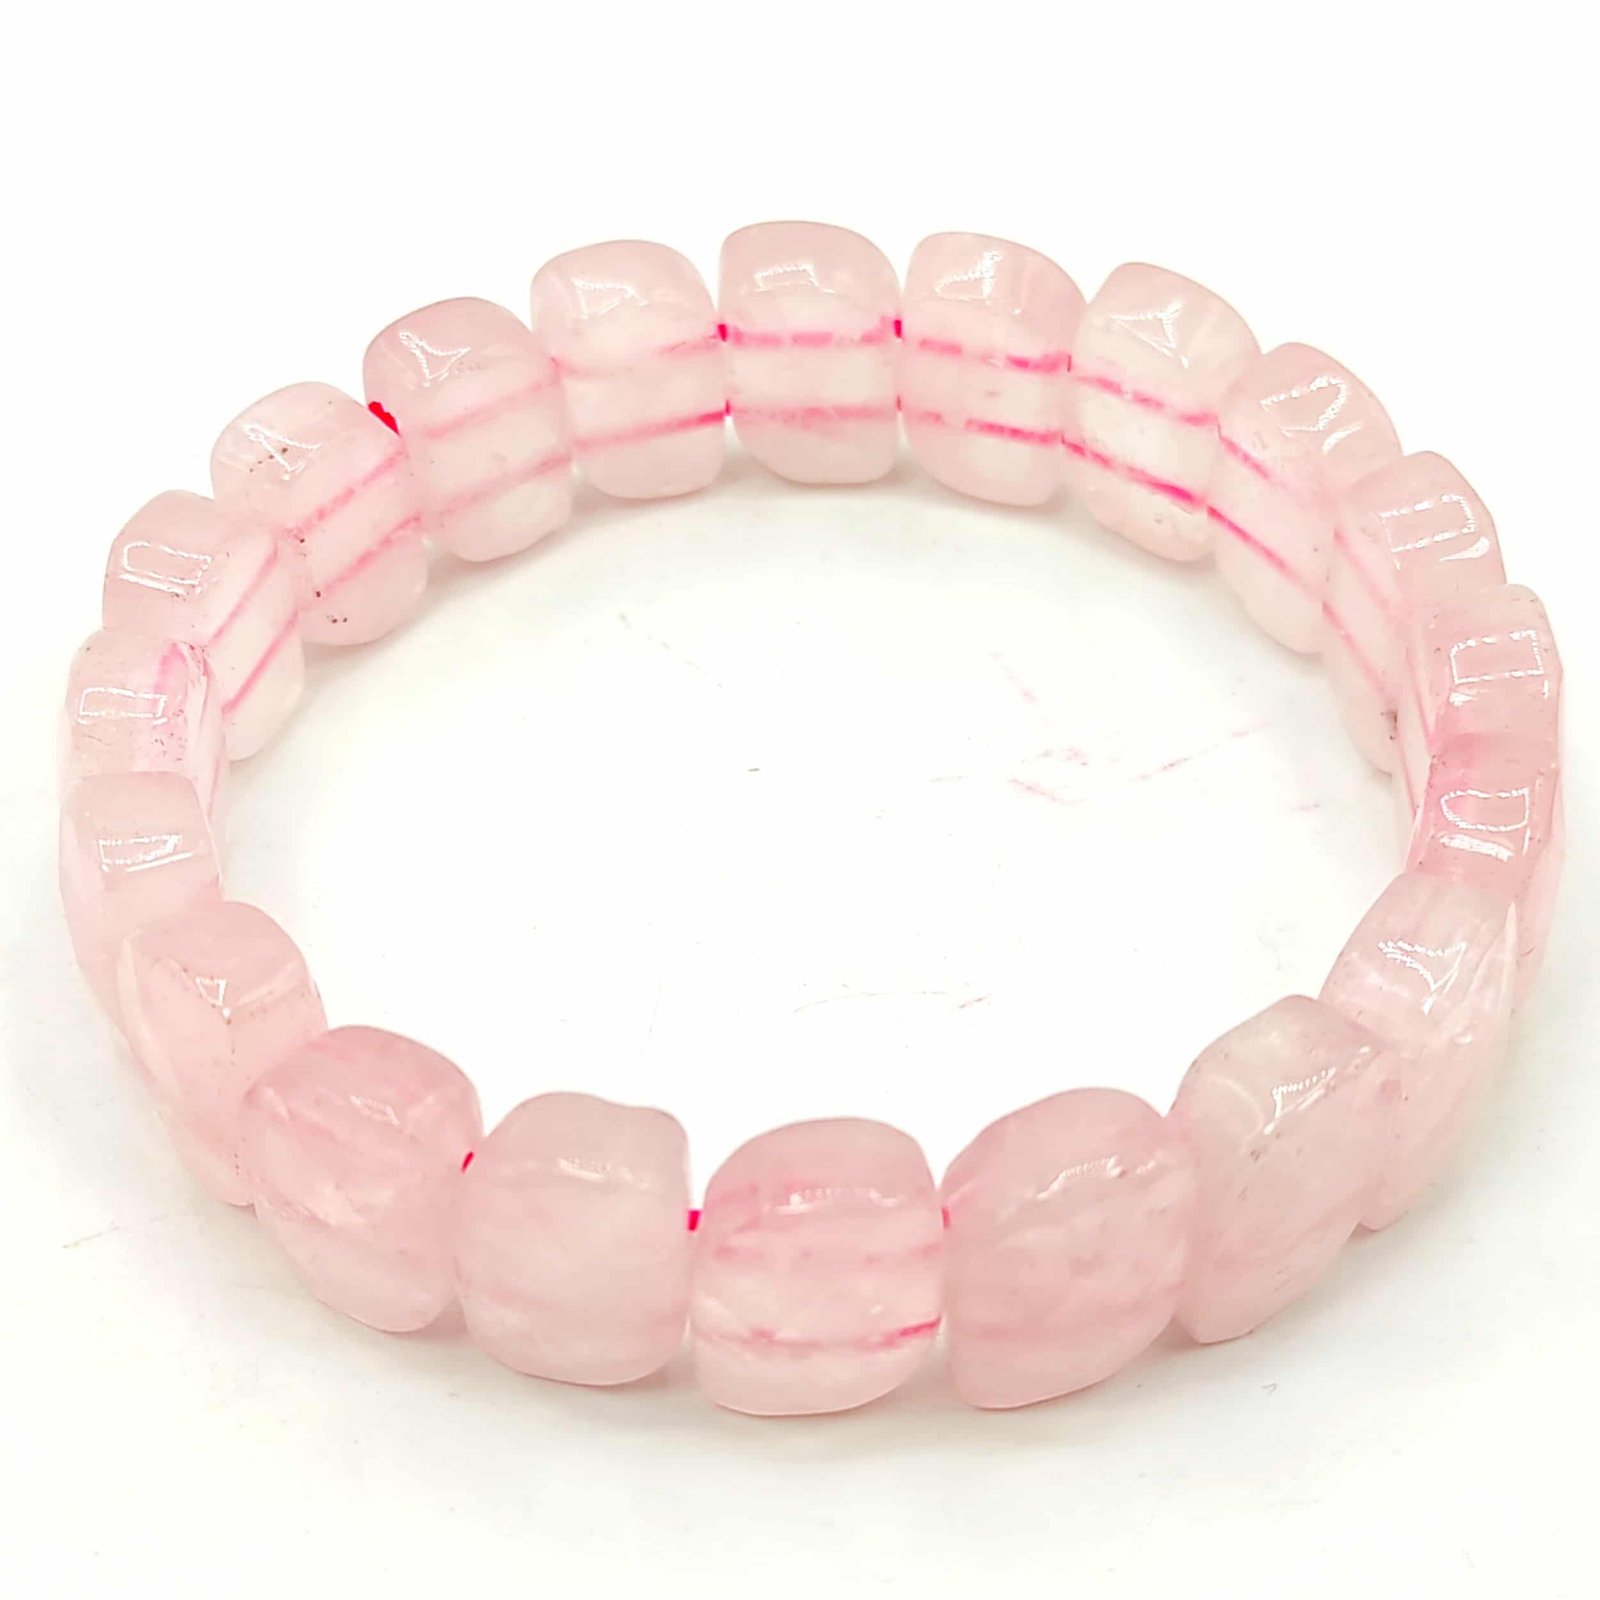 8MM Rose Quartz w/ Palo Santo Beads Healing Bracelet